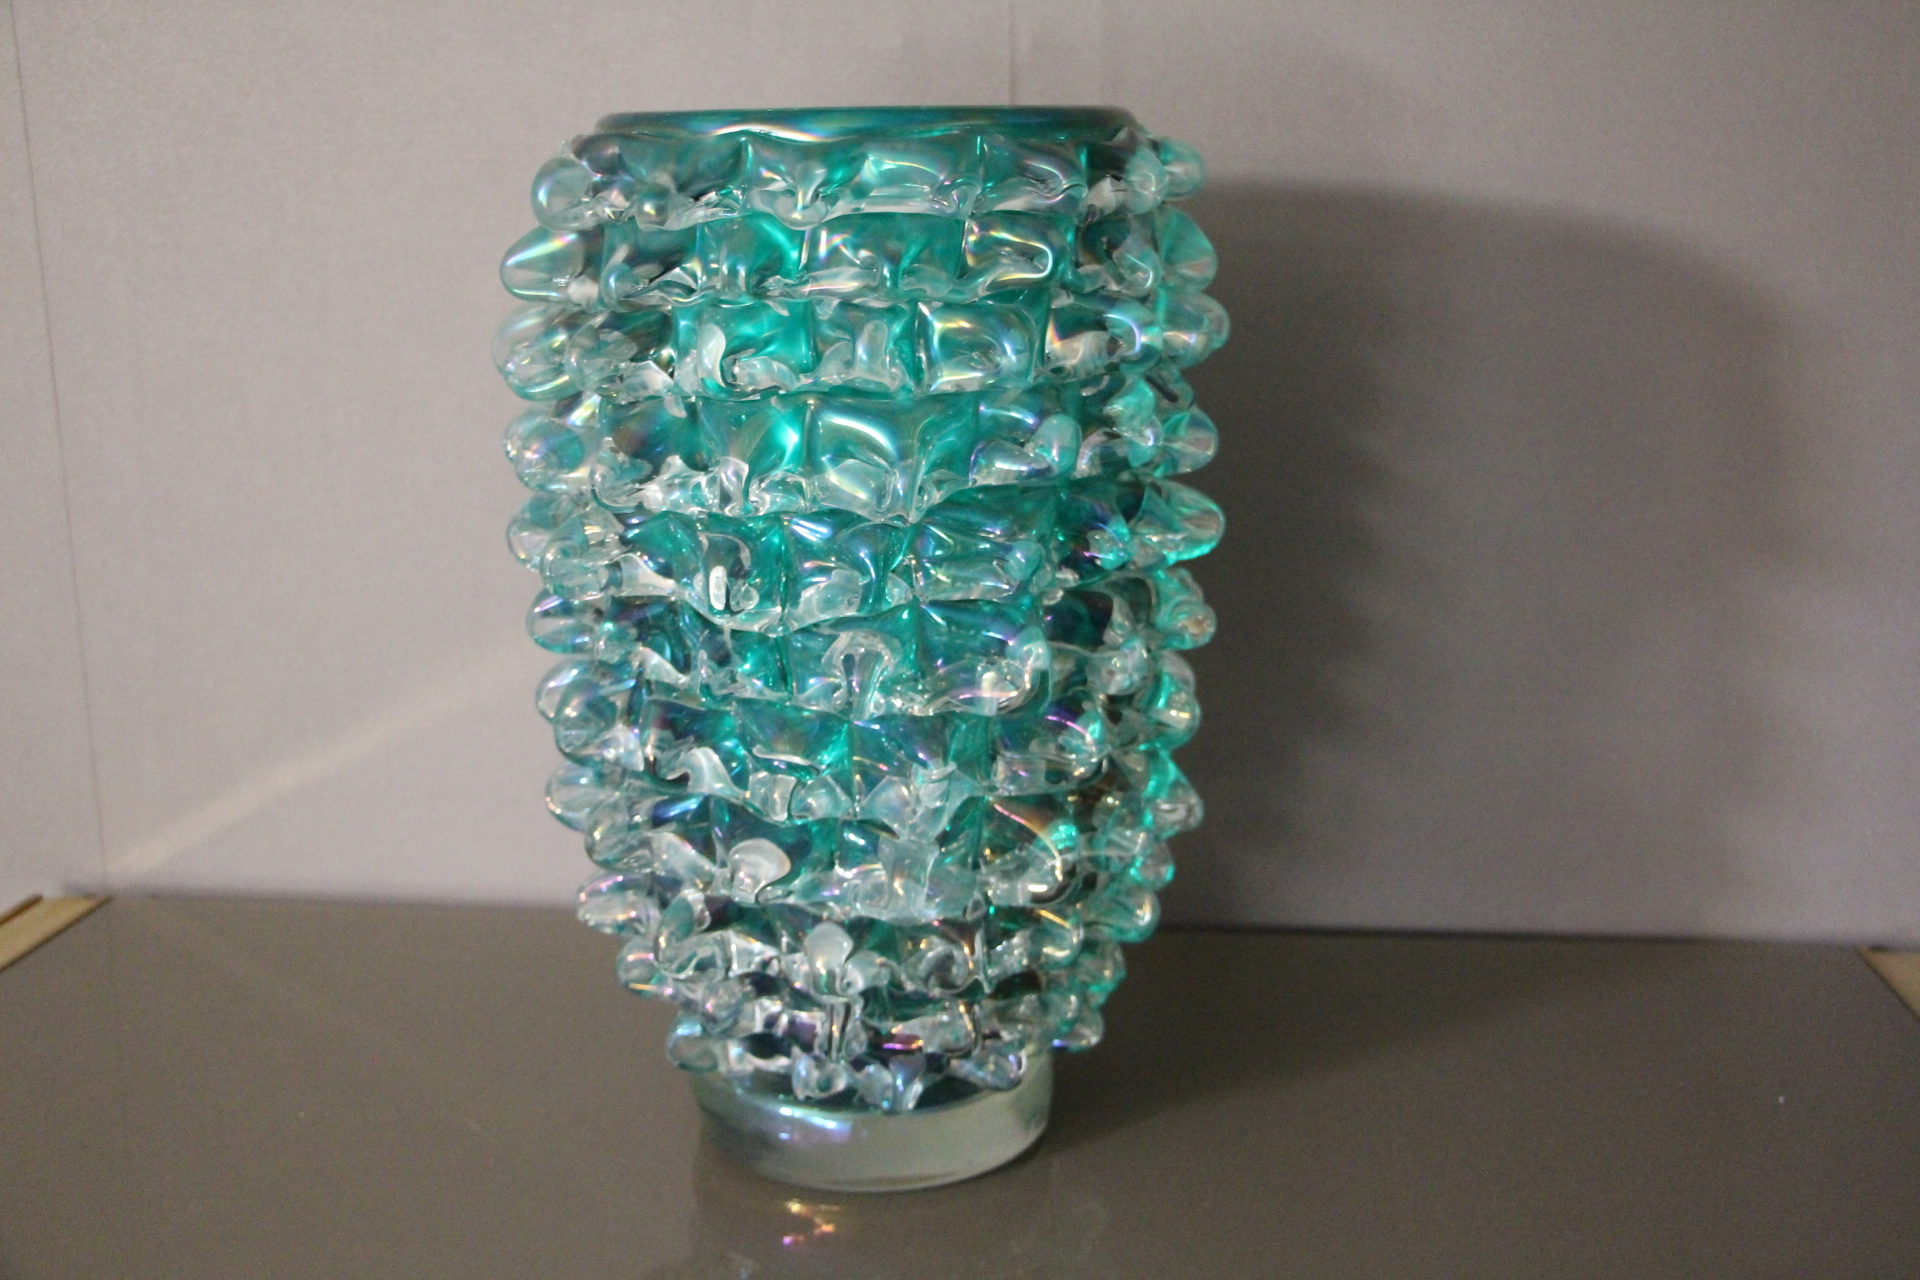 Grand vase en verre de Murano bleu-vert turquoise rostrato de Cenedese Murano